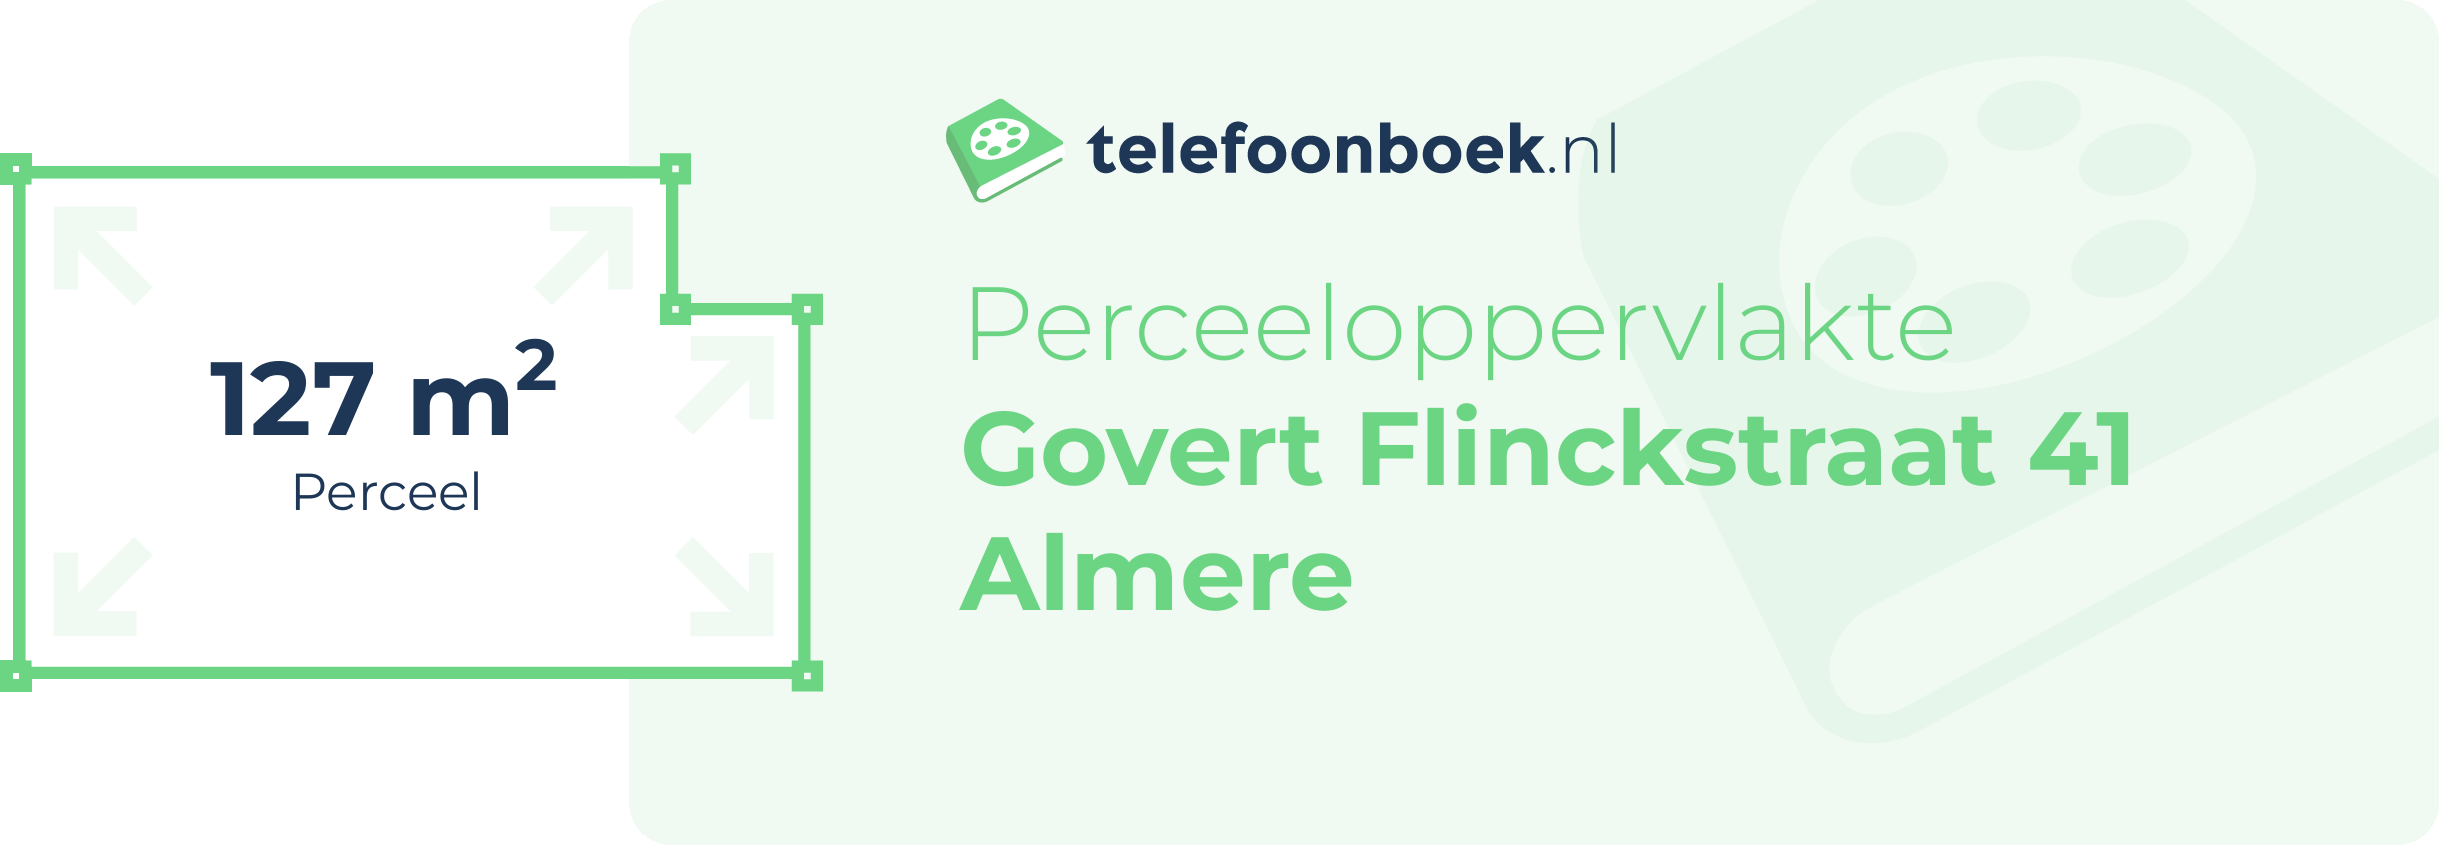 Perceeloppervlakte Govert Flinckstraat 41 Almere